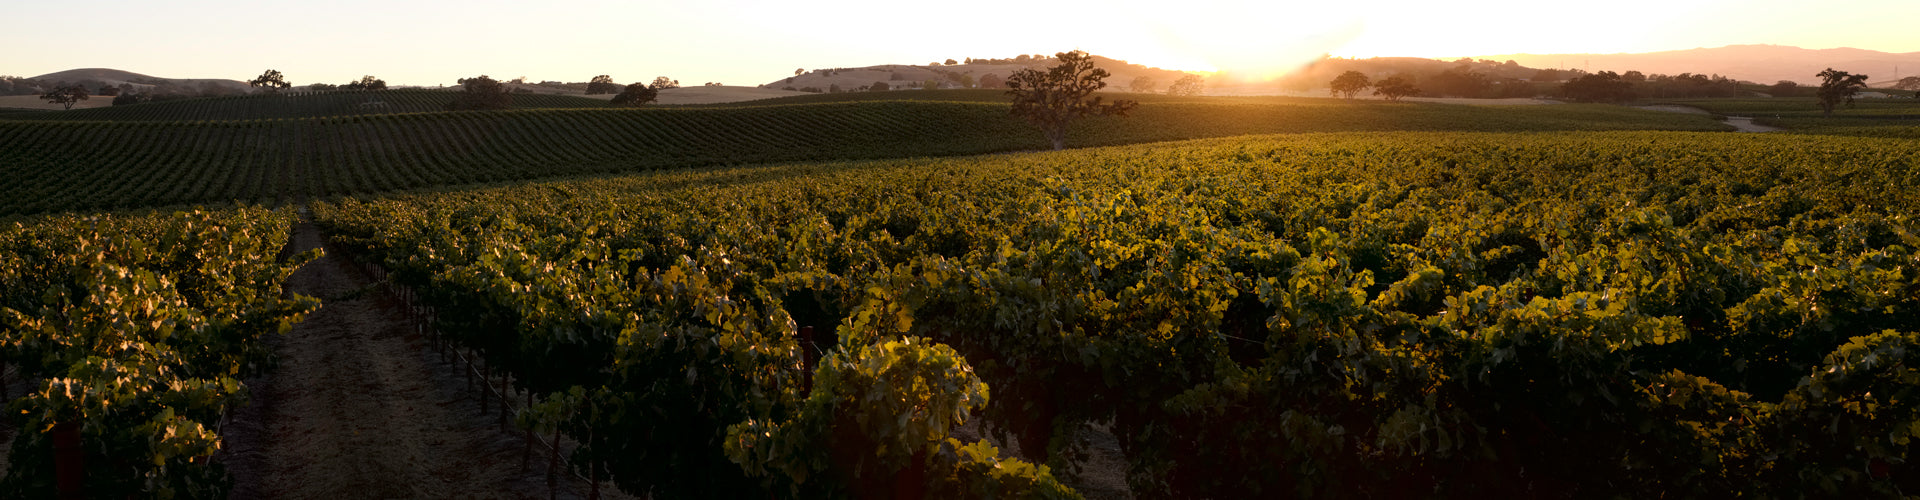 Vineyards of J. Lohr Montery Winery in California